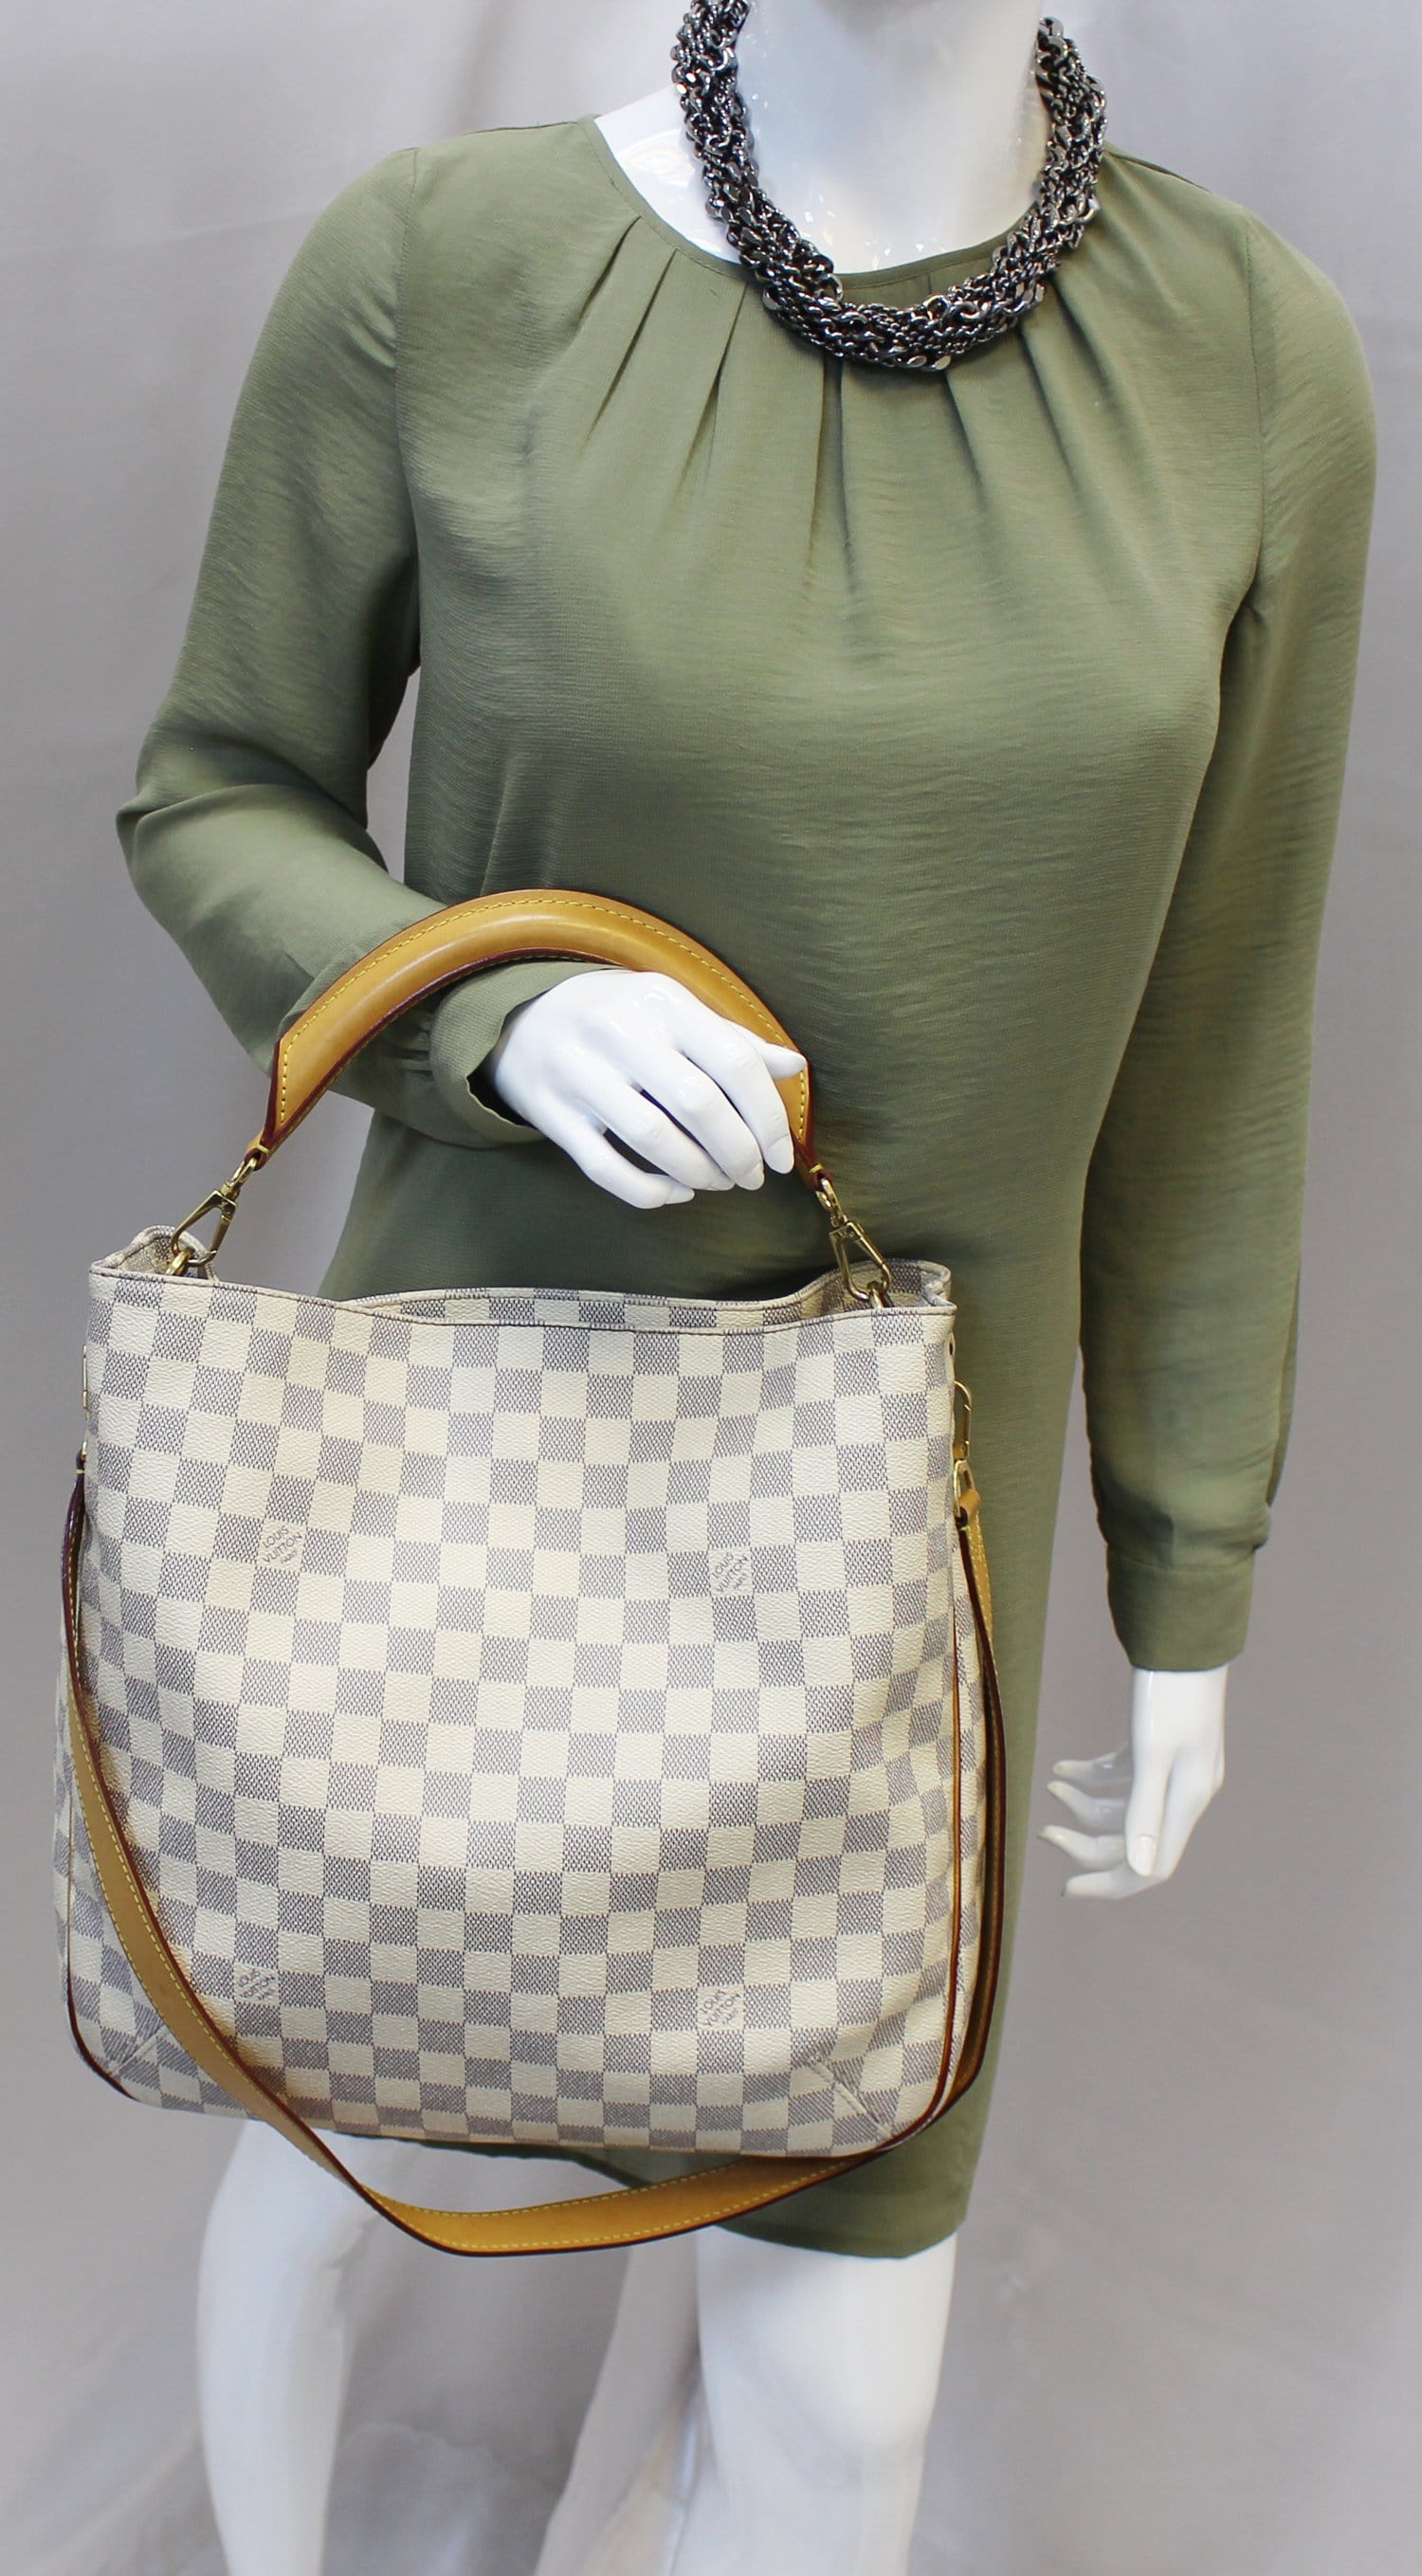 Soffi - Louis Vuitton - LOUISVUITTON.COM  Bags, White shoulder bags,  Fashion bags